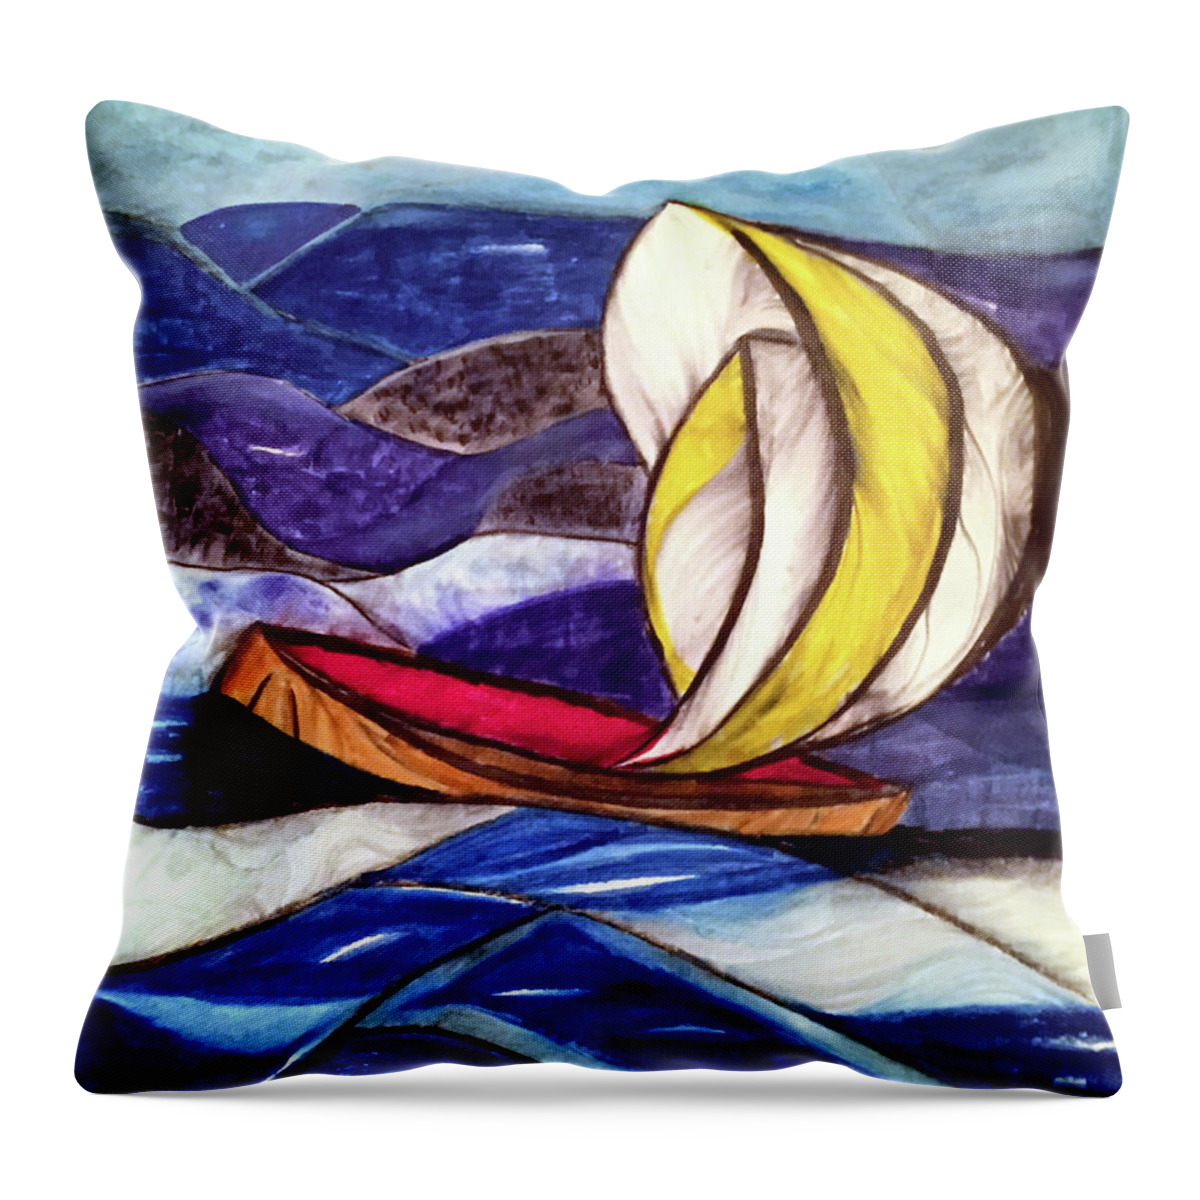 Seacape Throw Pillow featuring the digital art Bump by Dennis Ellman